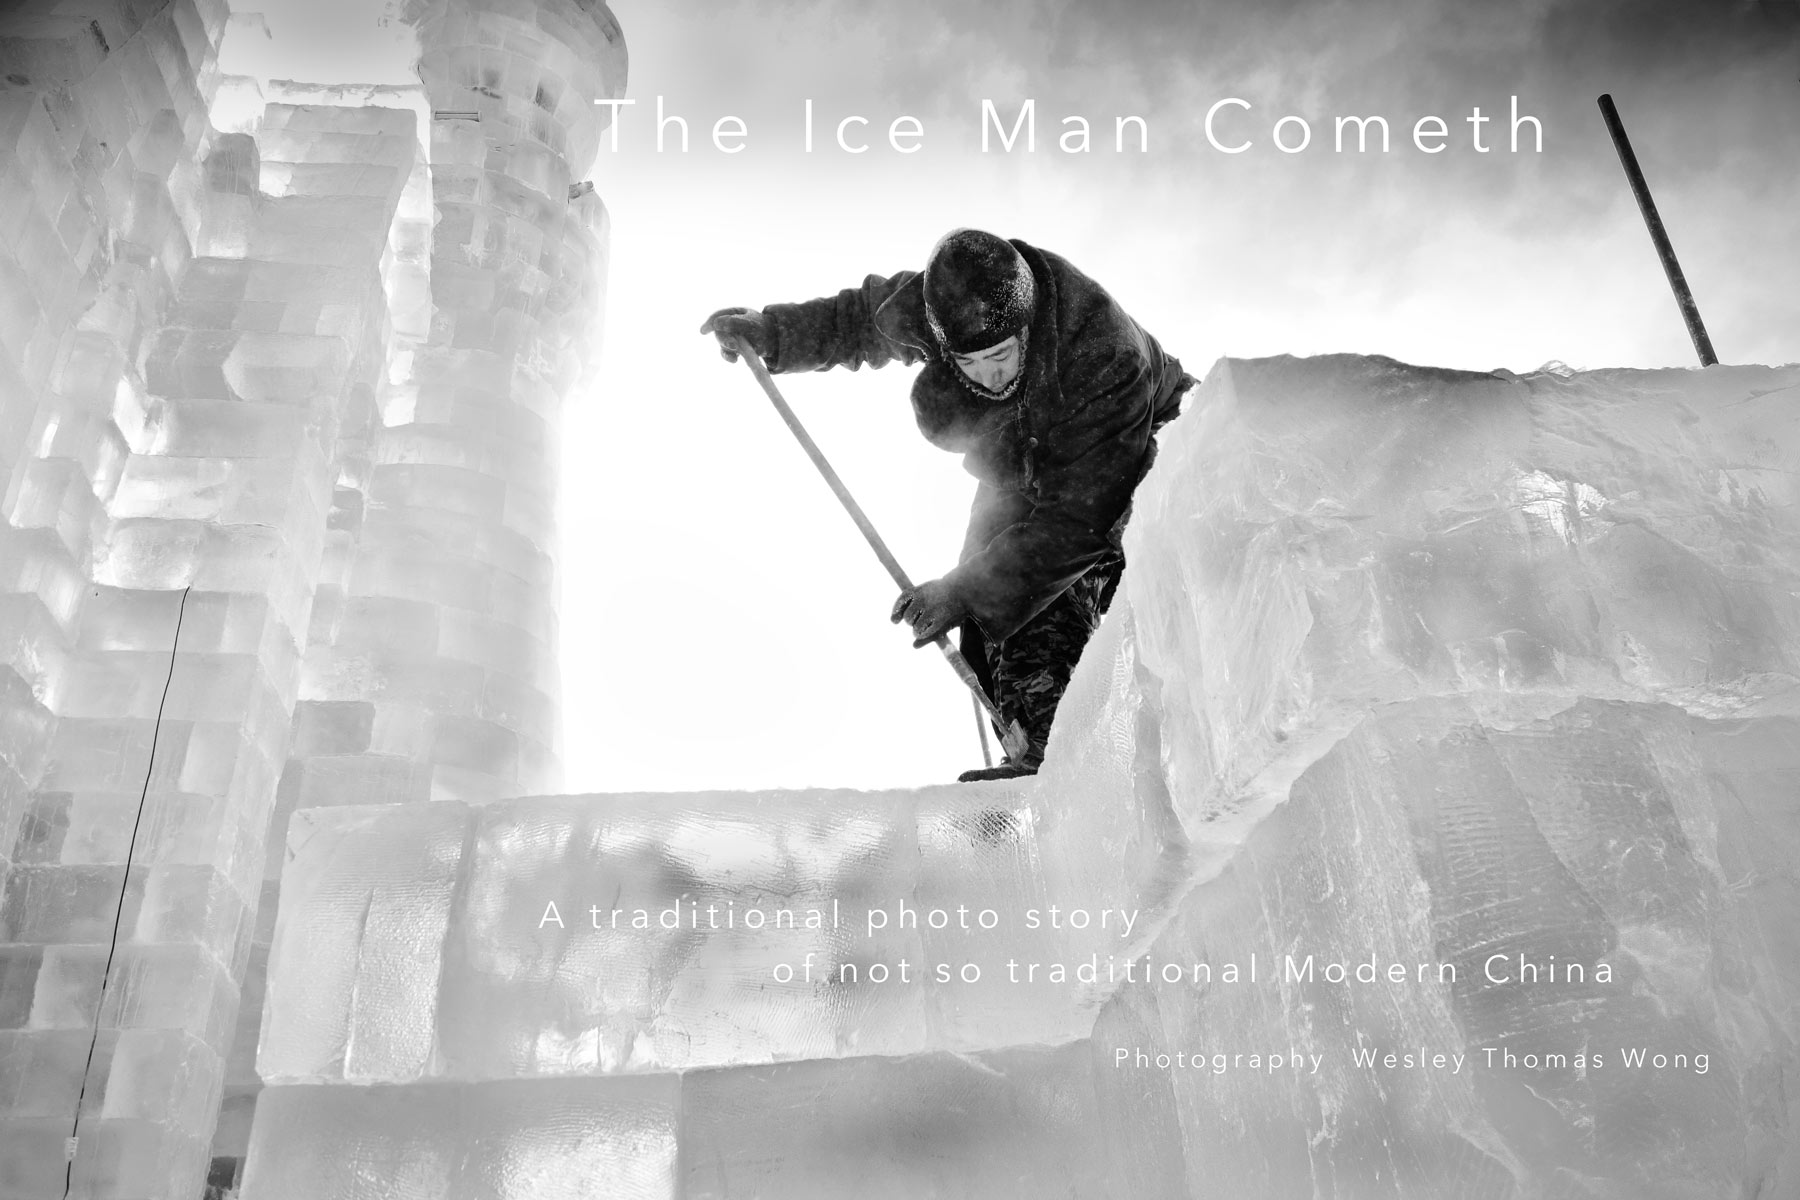  : THE ICE MAN COMETH : WESLEY THOMAS WONG PHOTOGRAPHY